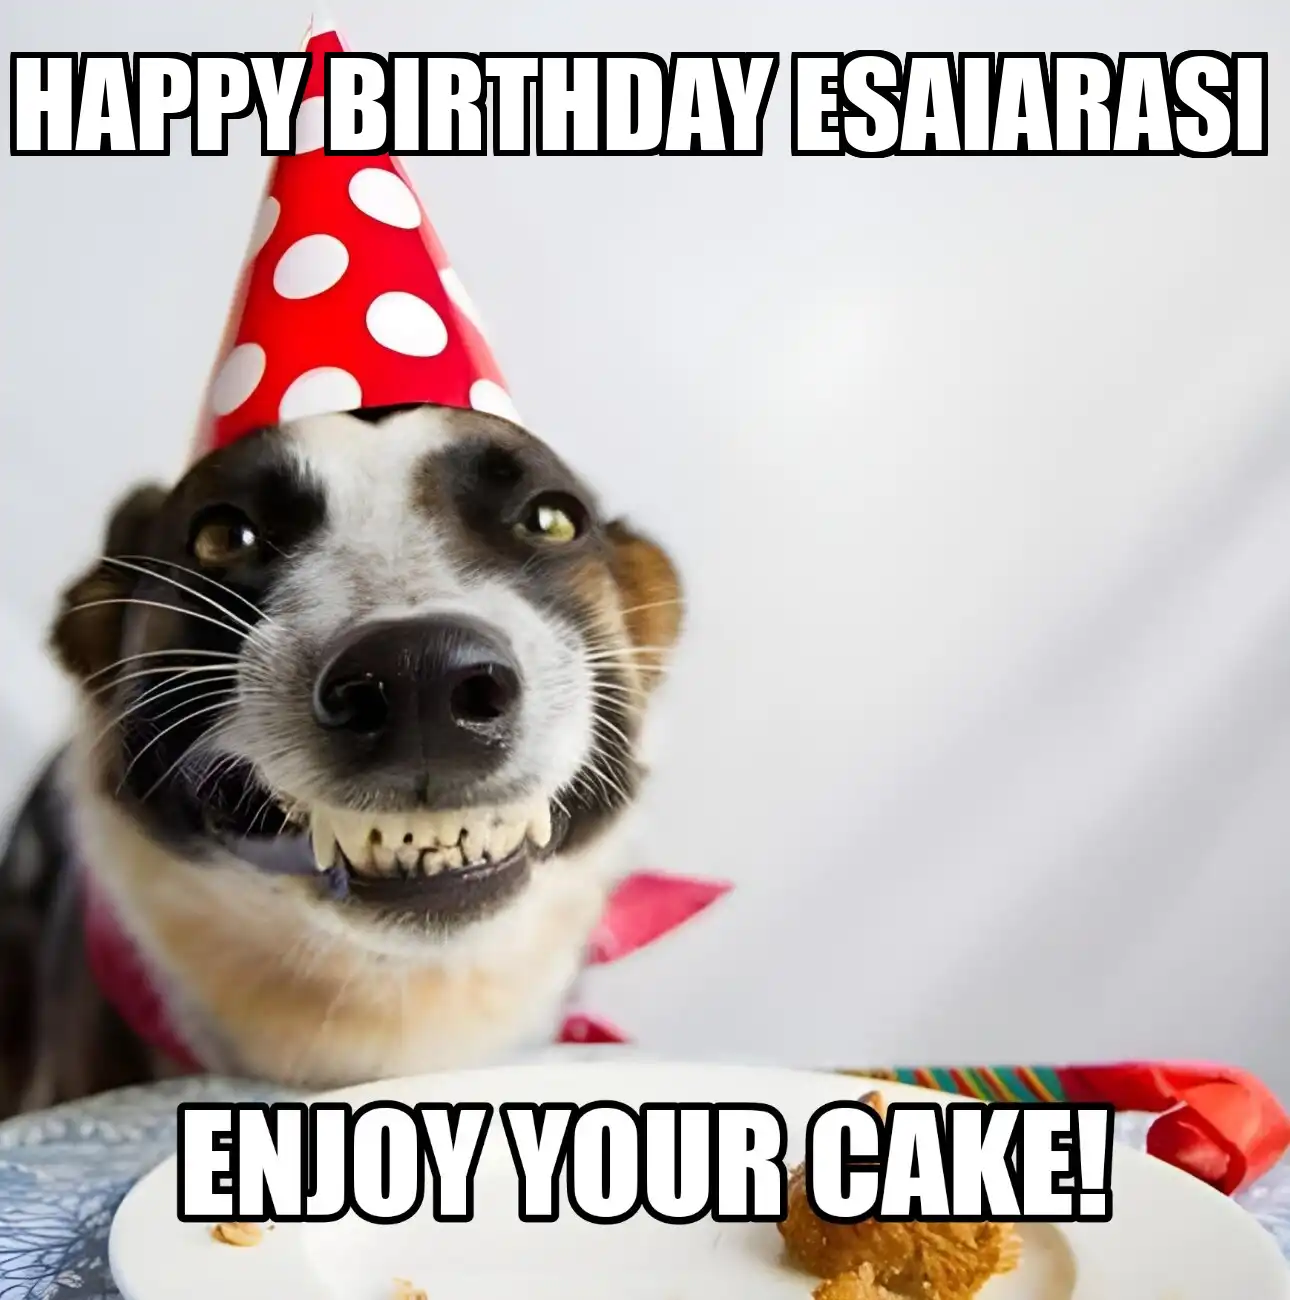 Happy Birthday Esaiarasi Enjoy Your Cake Dog Meme